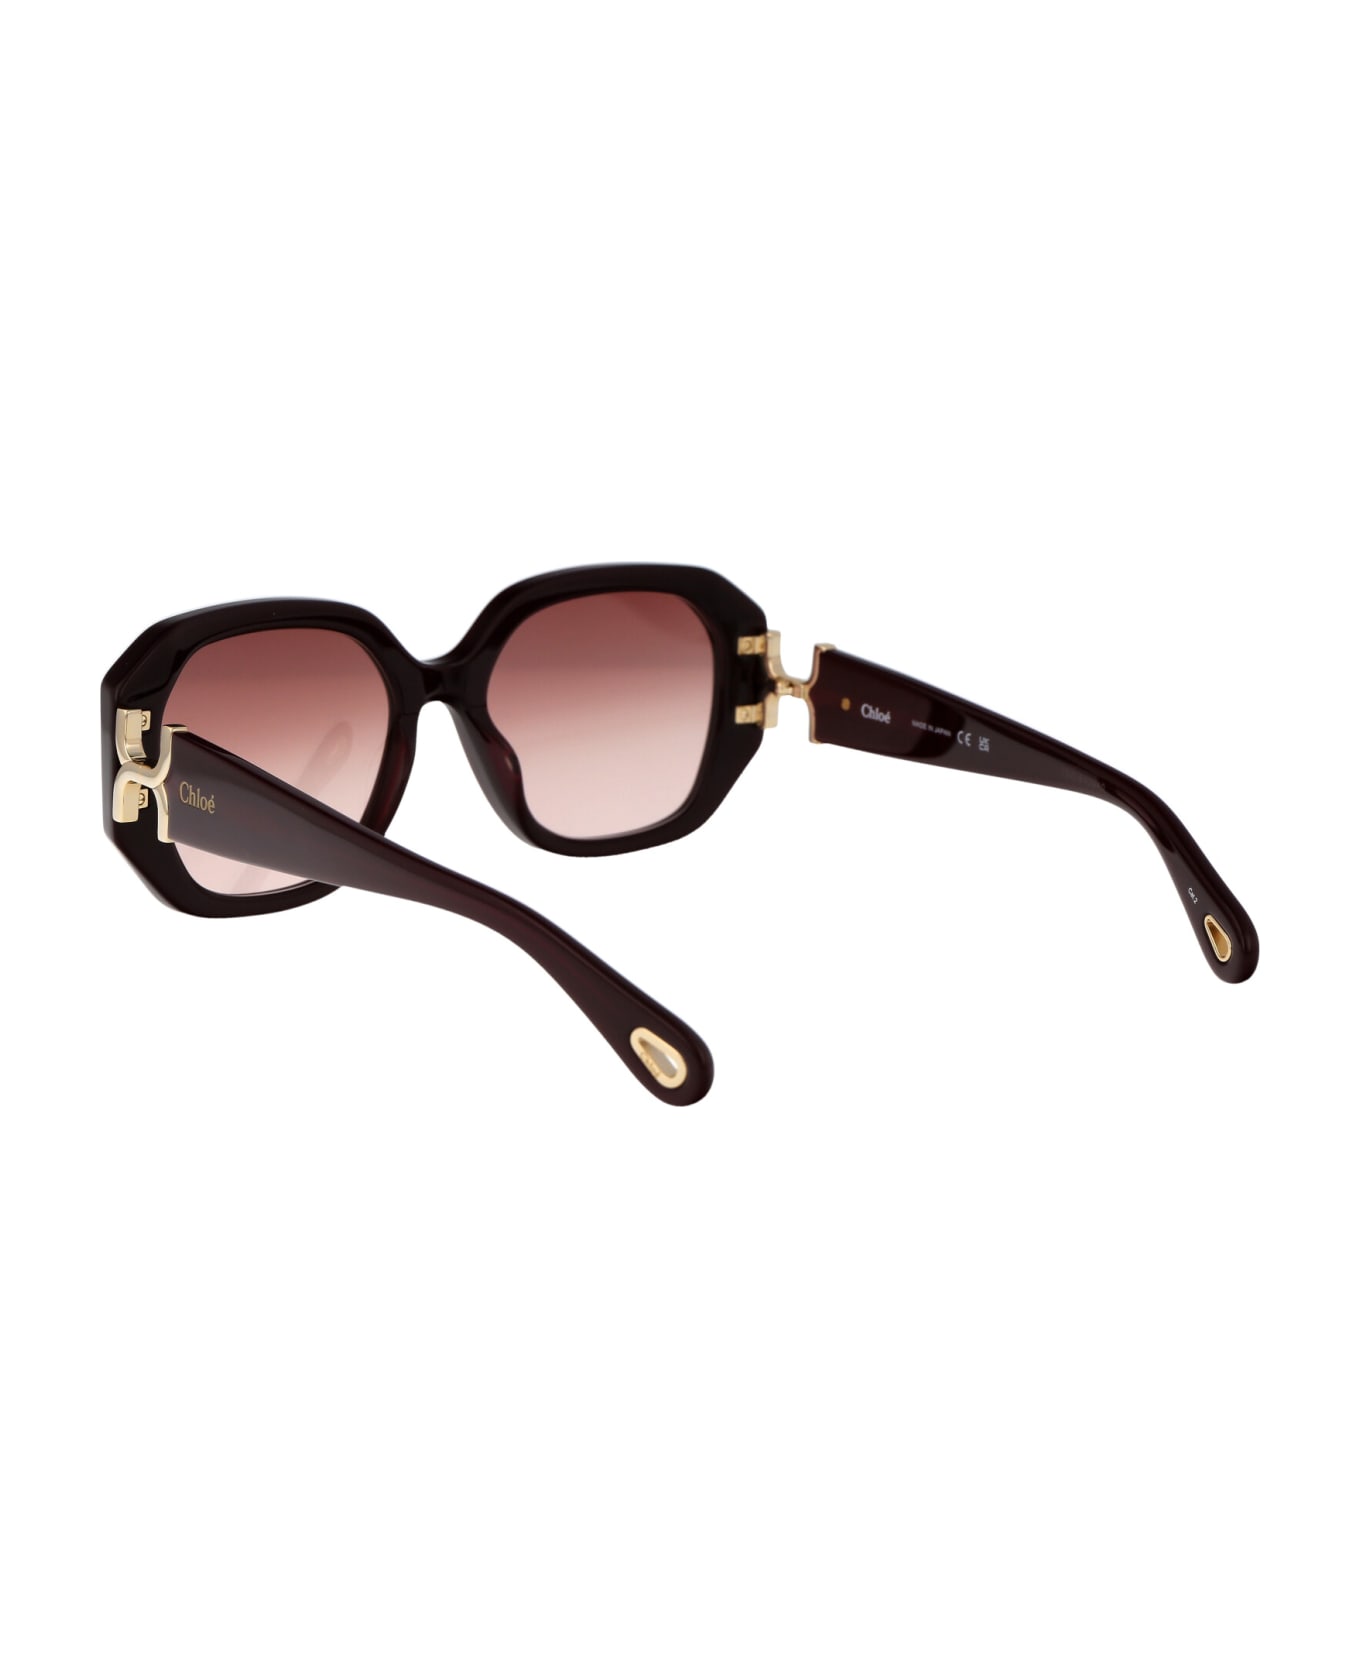 Chloé Eyewear Ch0236s Sunglasses - 003 BURGUNDY BURGUNDY ORANGE サングラス